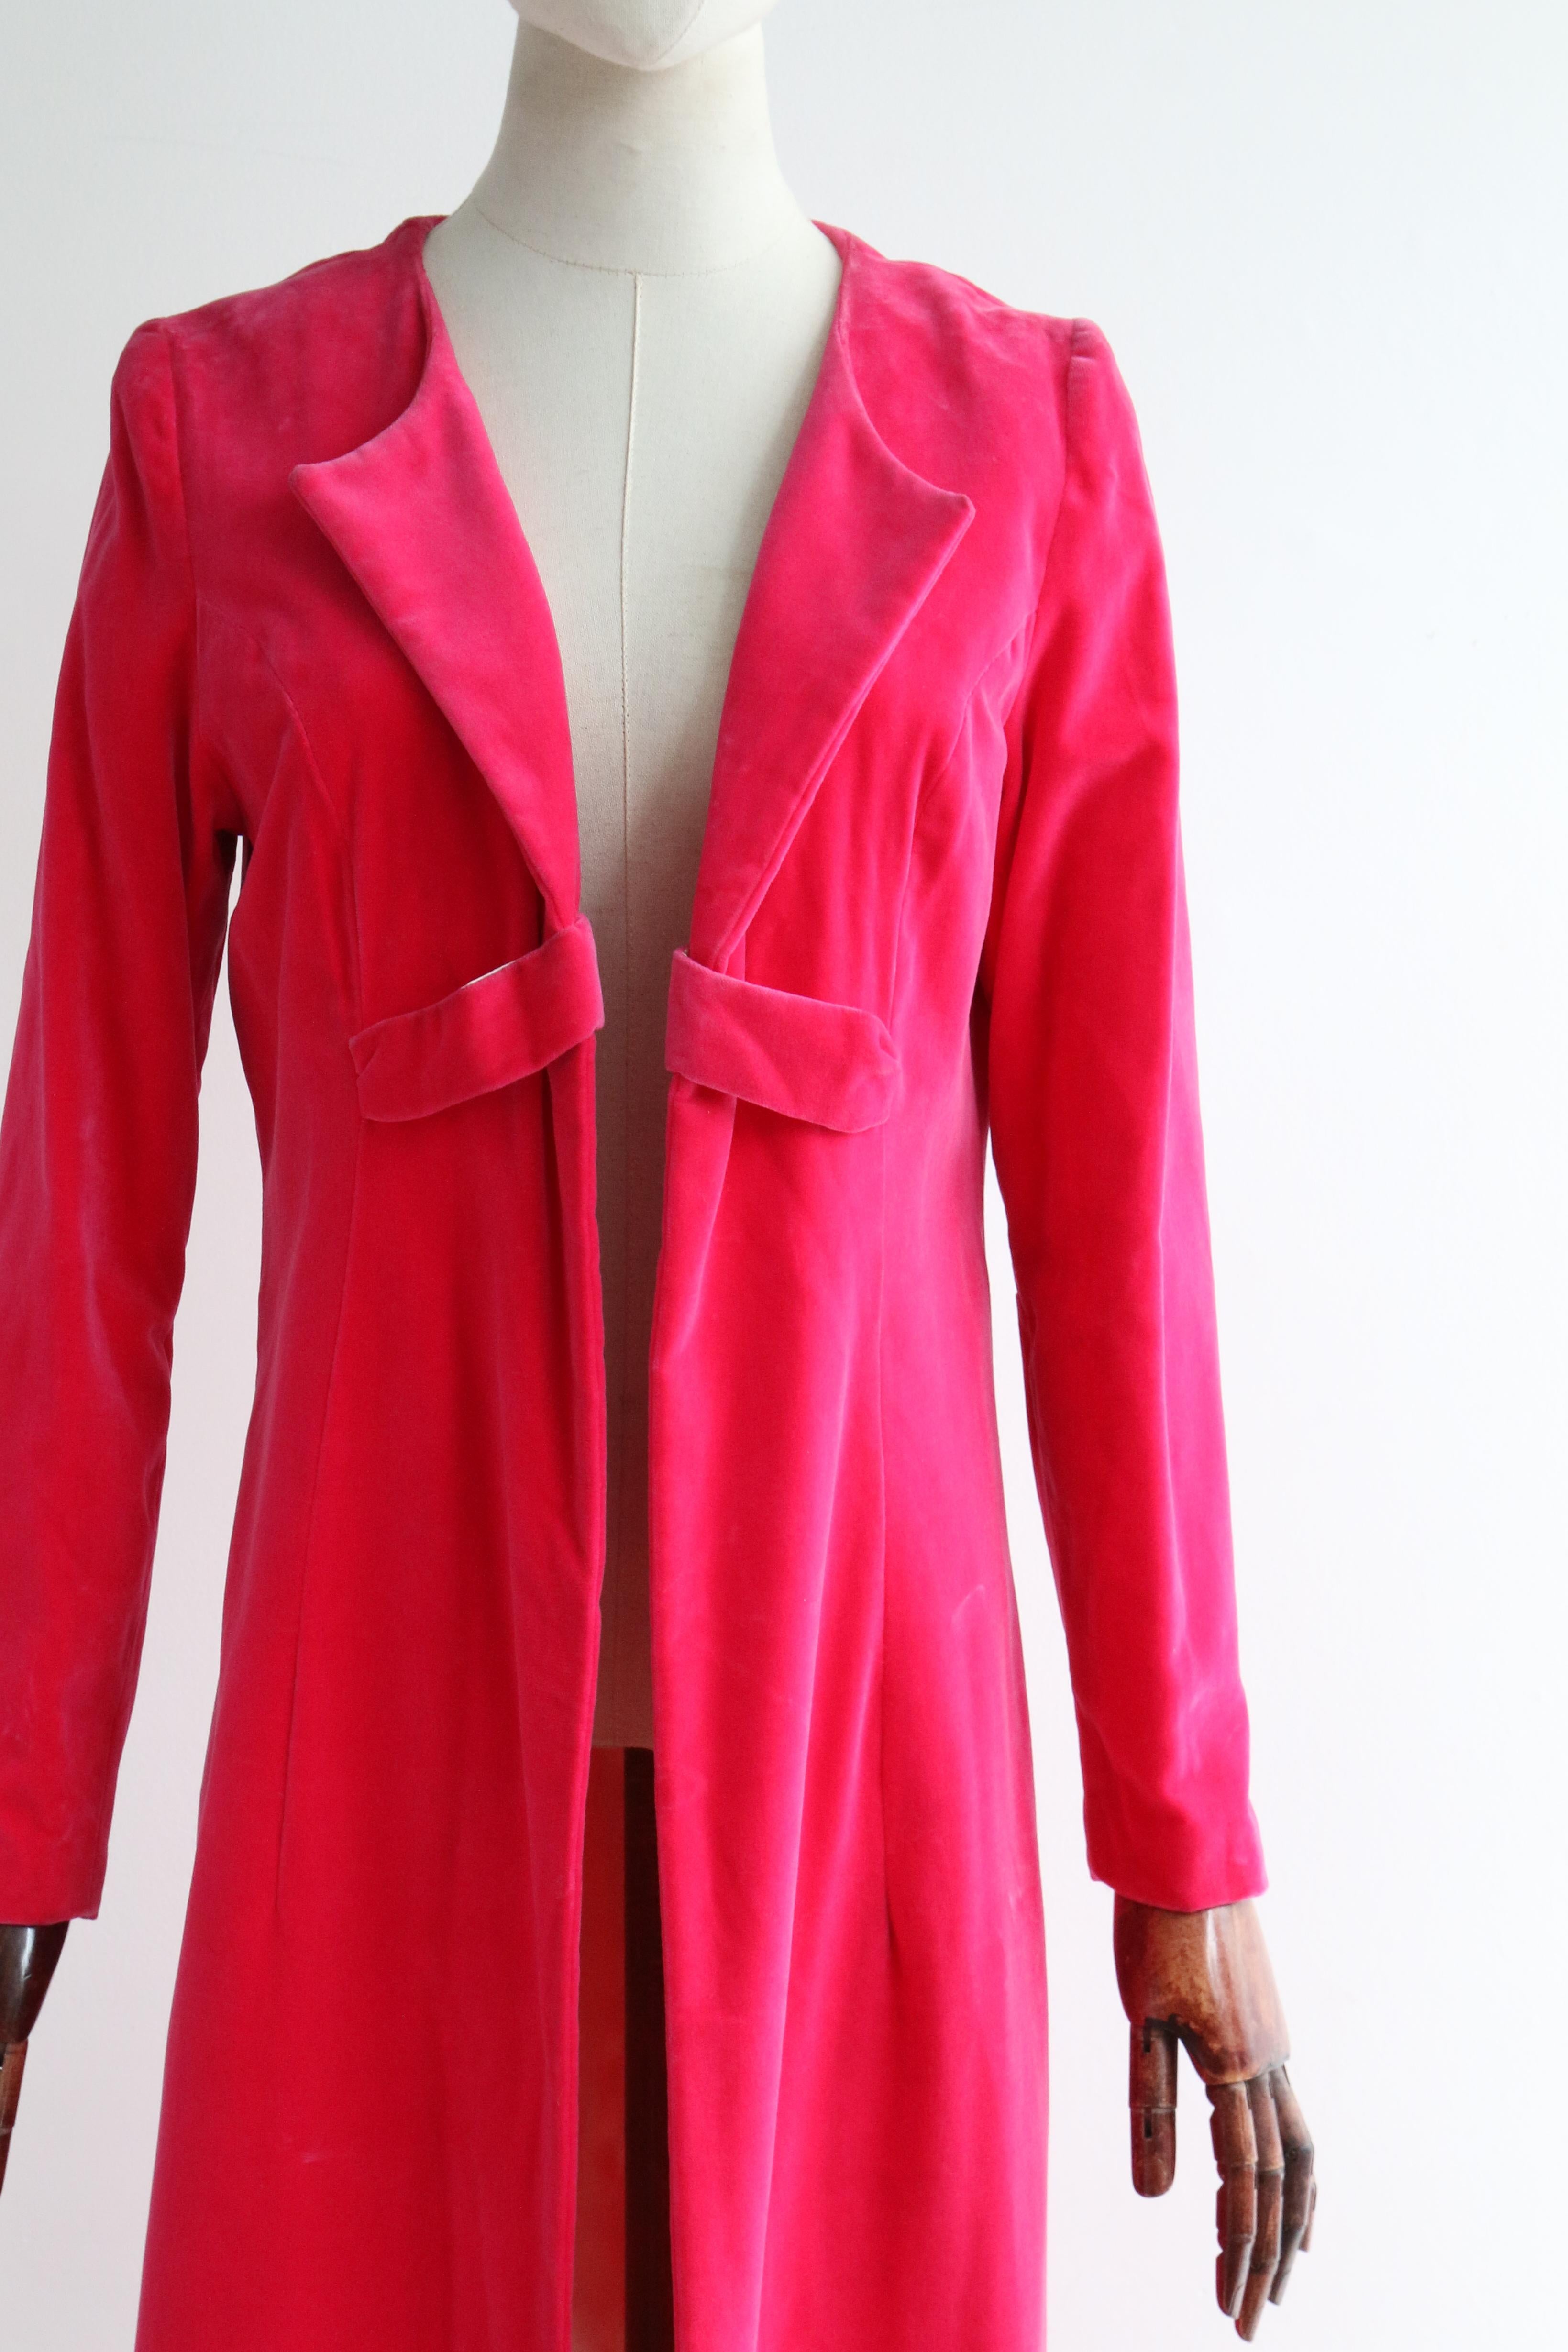 Vintage 1960's Hot Pink Velvet Evening Coat UK 12 US 8 In Good Condition For Sale In Cheltenham, GB